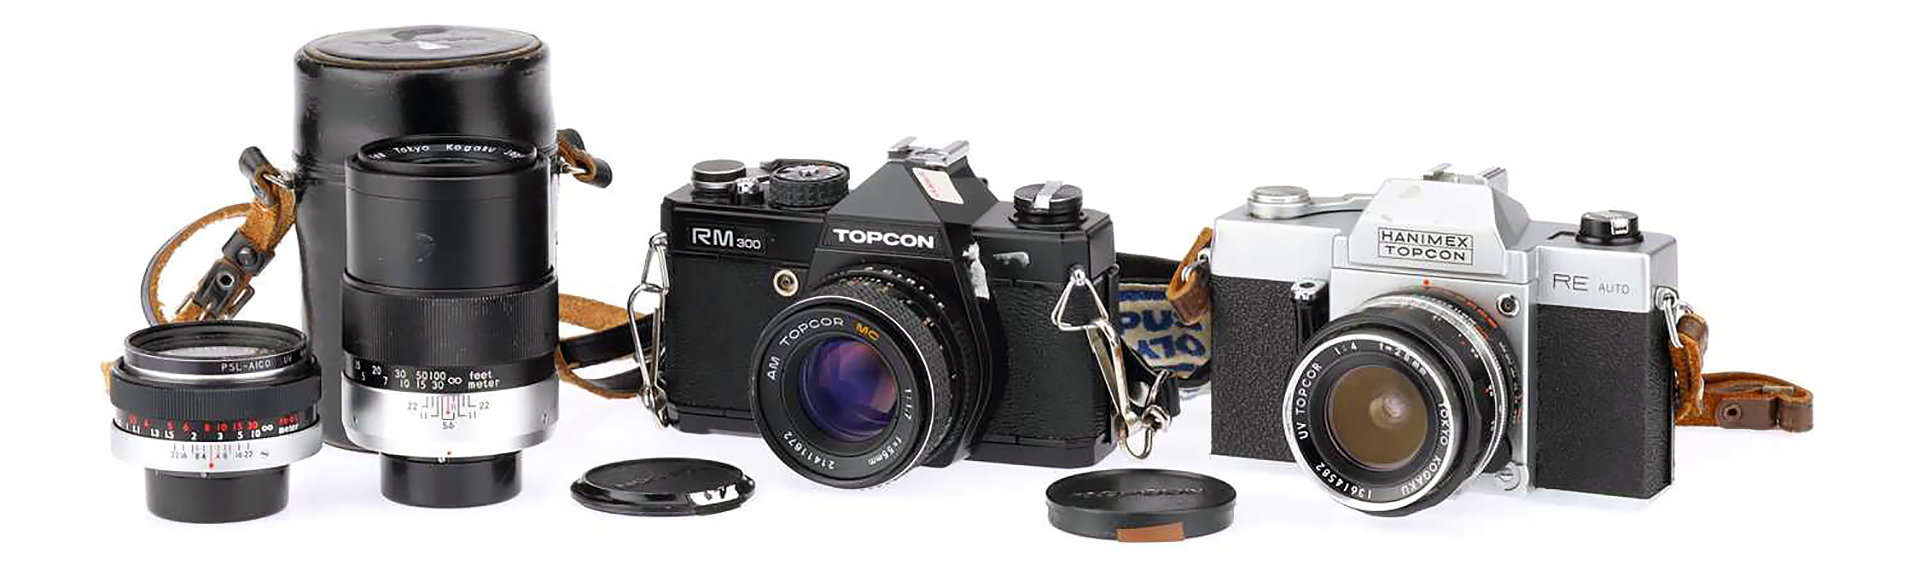 1920x574px-Topcon-Cameras-and-lenses-vWA24